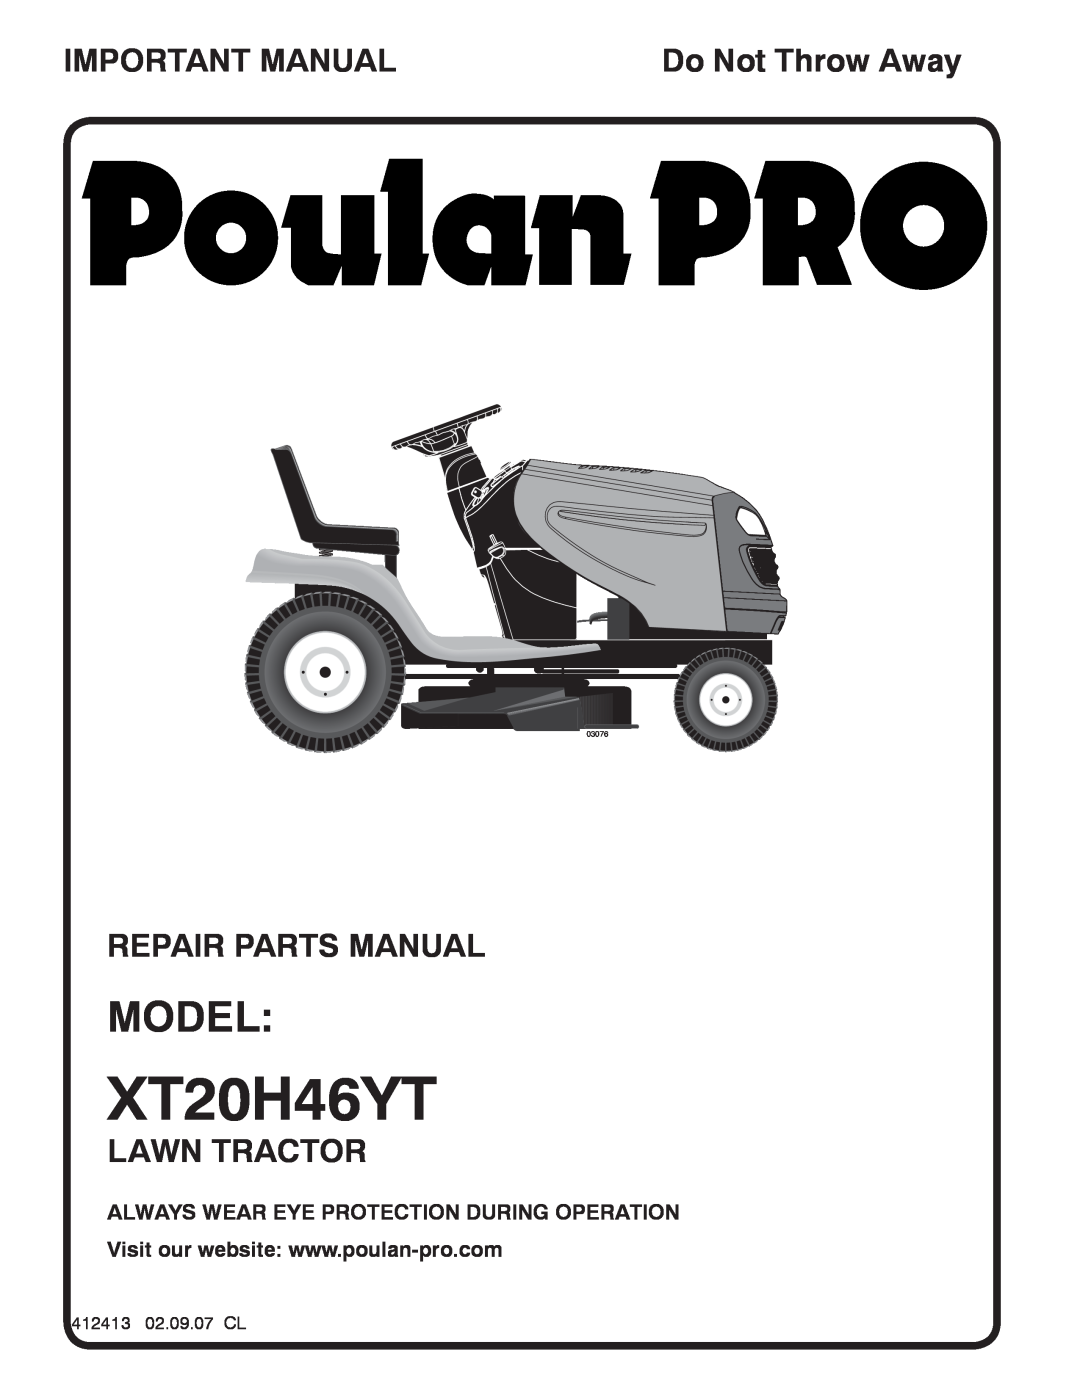 Poulan 960420047, 412413 manual Model, Important Manual, Repair Parts Manual, Lawn Tractor, Do Not Throw Away, XT20H46YT 